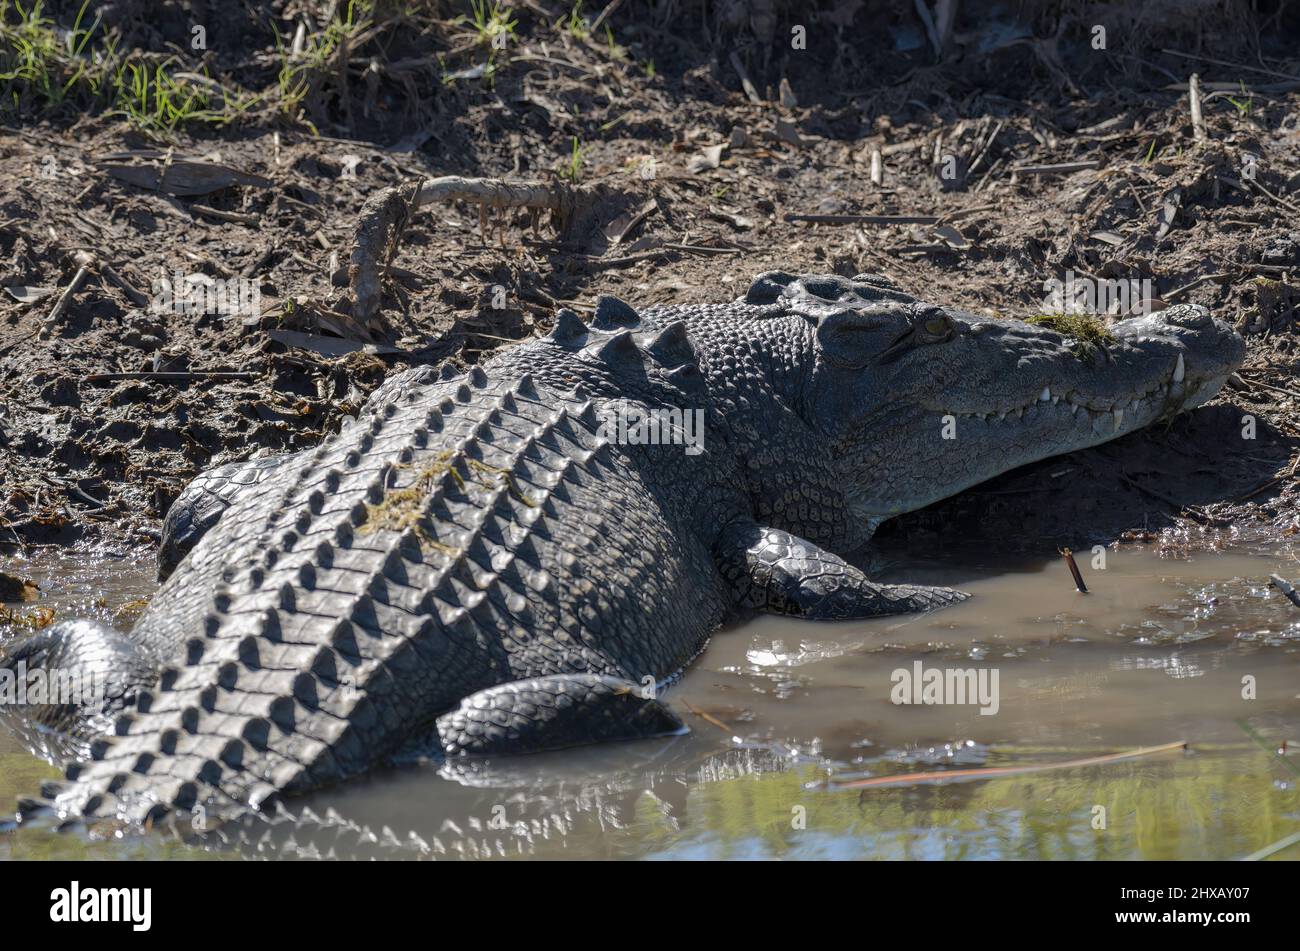 A very large crocodile resting on the banks of the Yellow water billabong, Kakadu, NT, Australia. Stock Photo